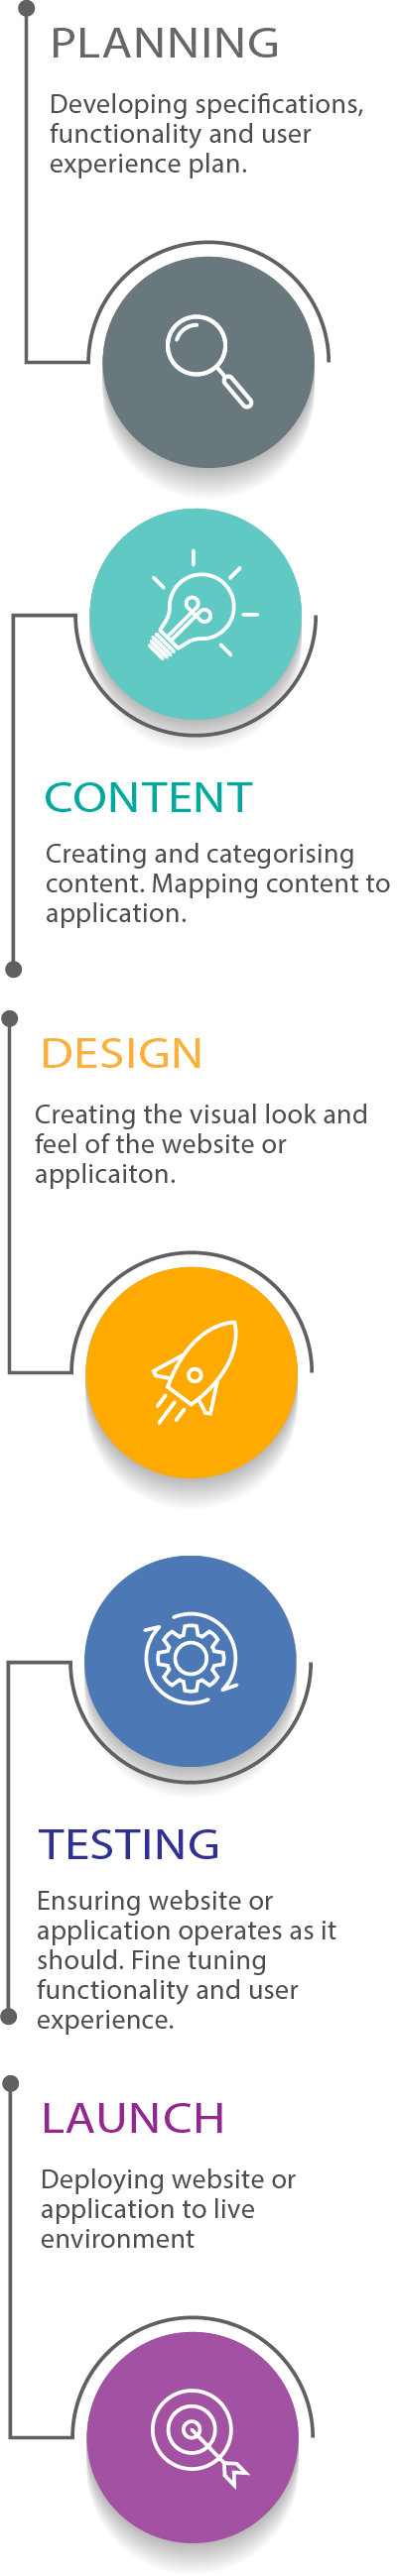 Rocket.Chip Web Solutions Design Process